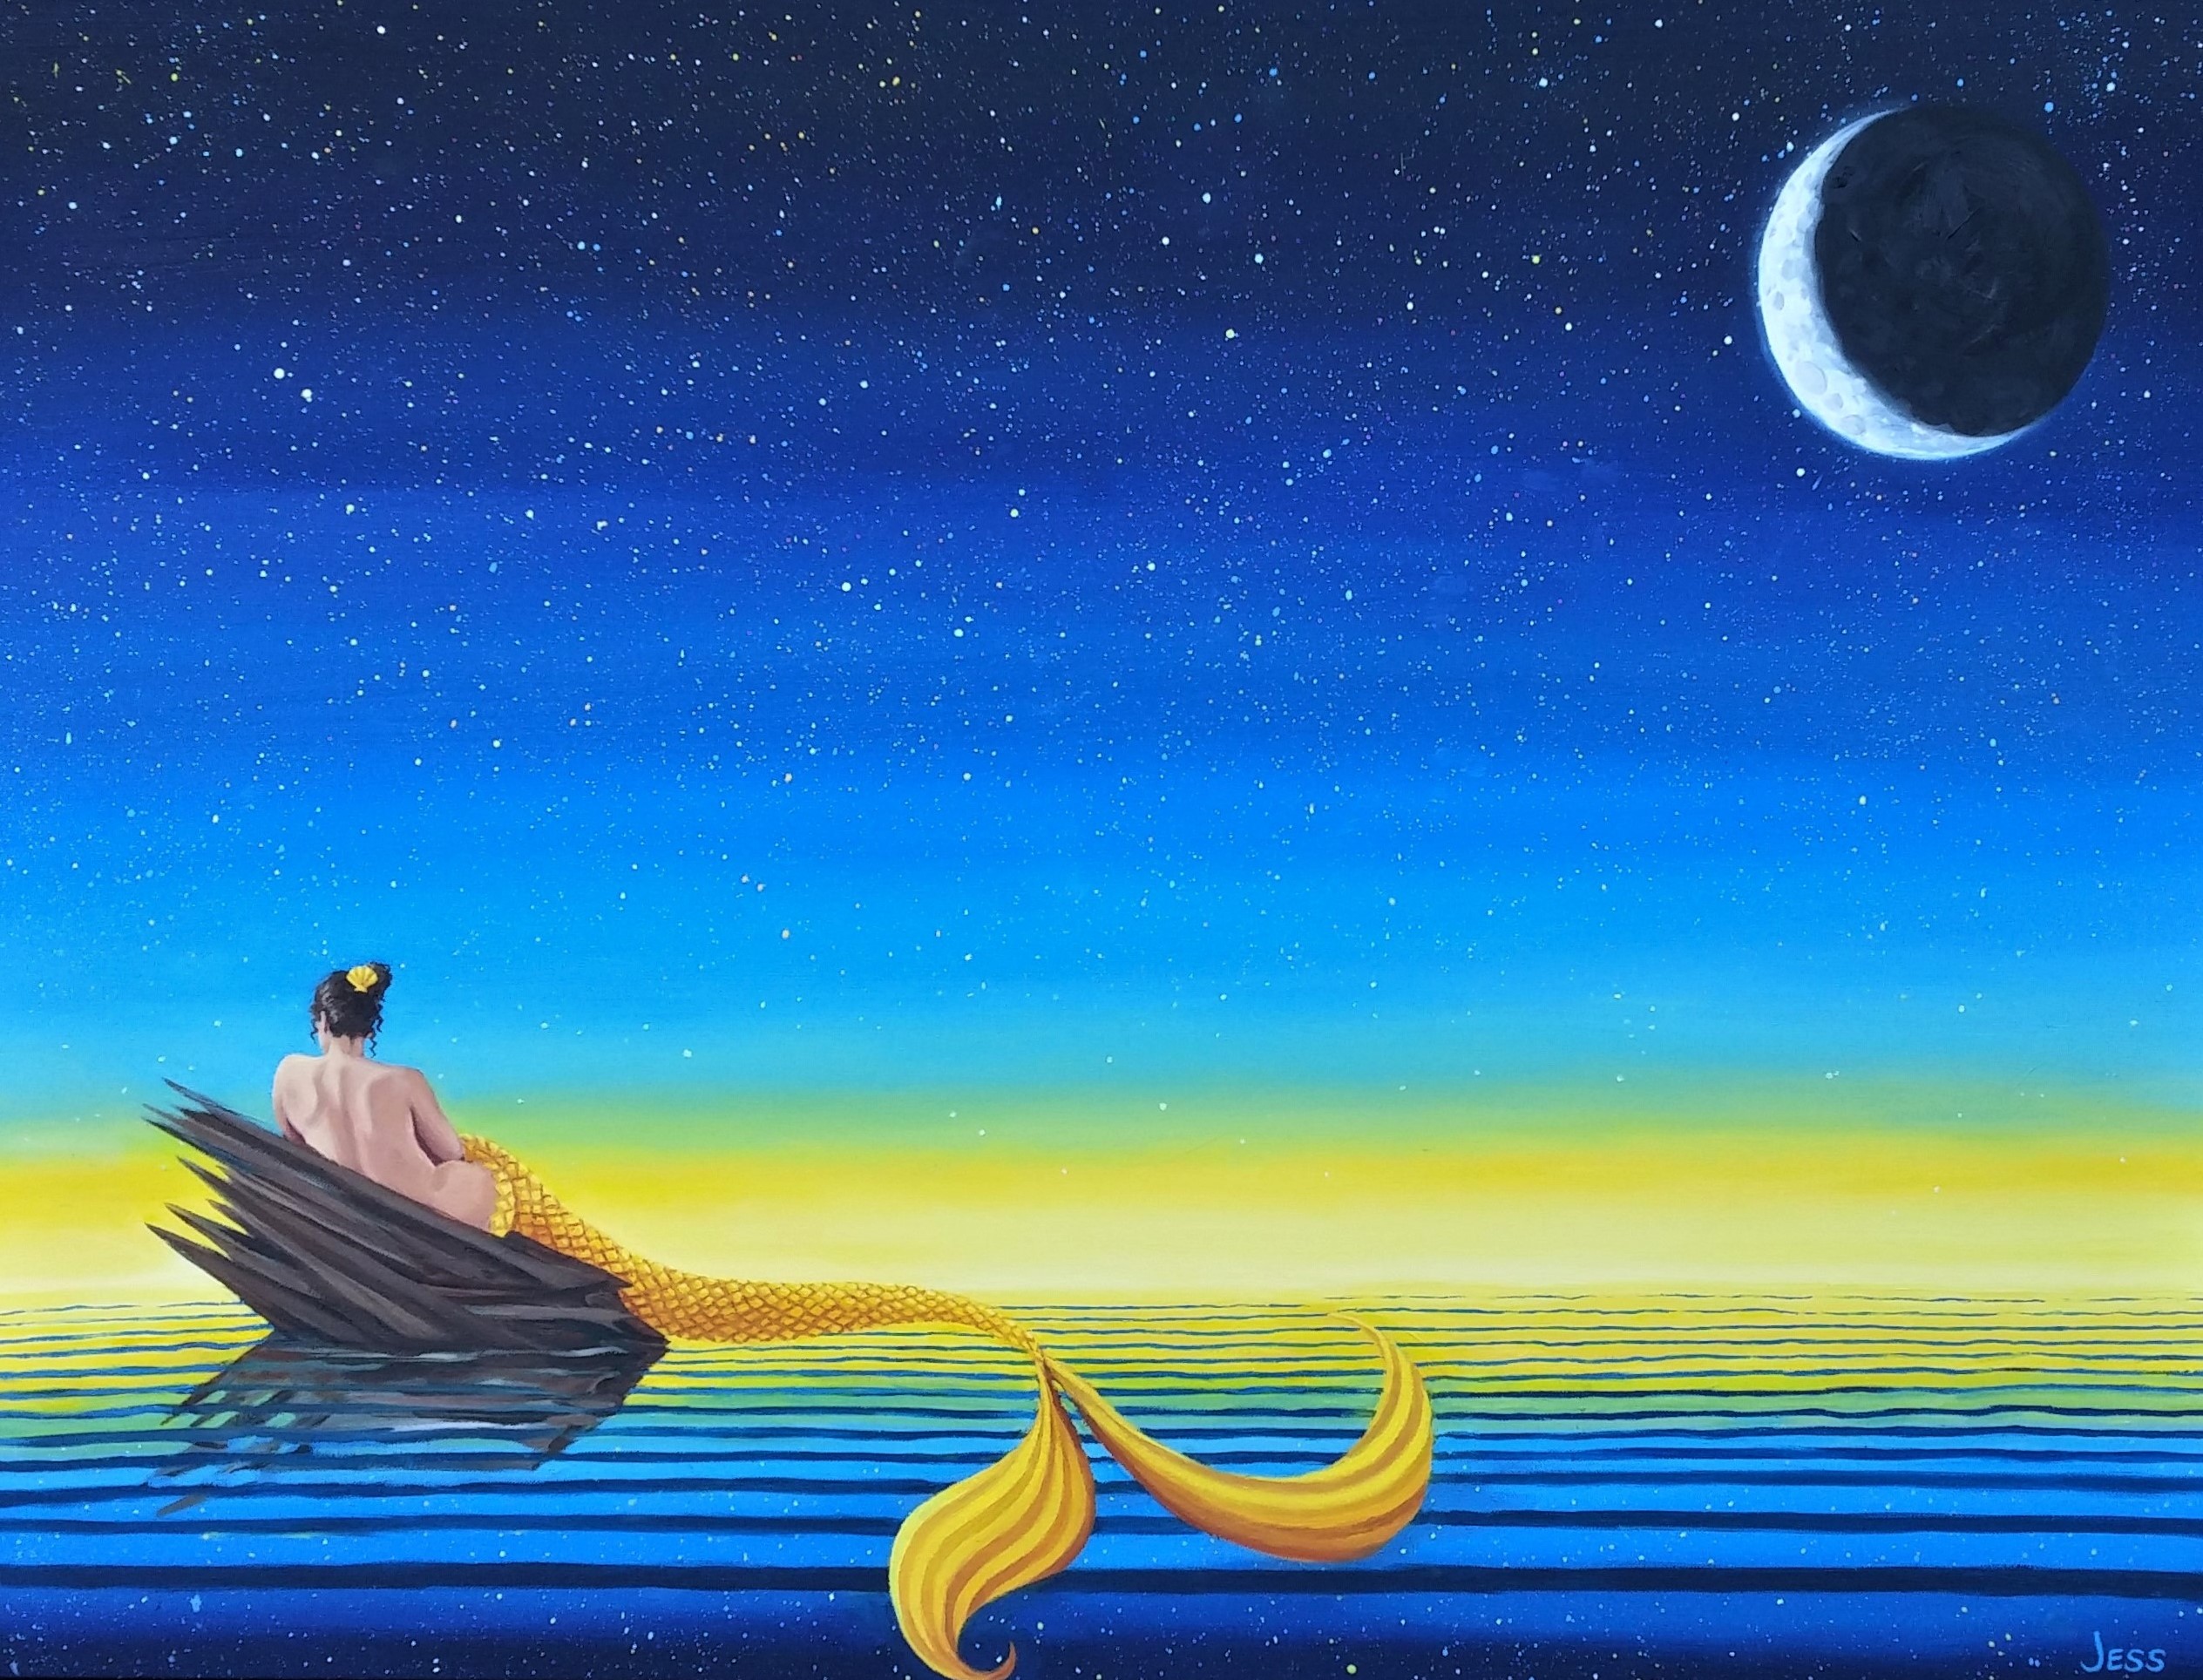 Midnight Mermaid, oil on canvas, 36x48 in, Jessica Siemens 2015